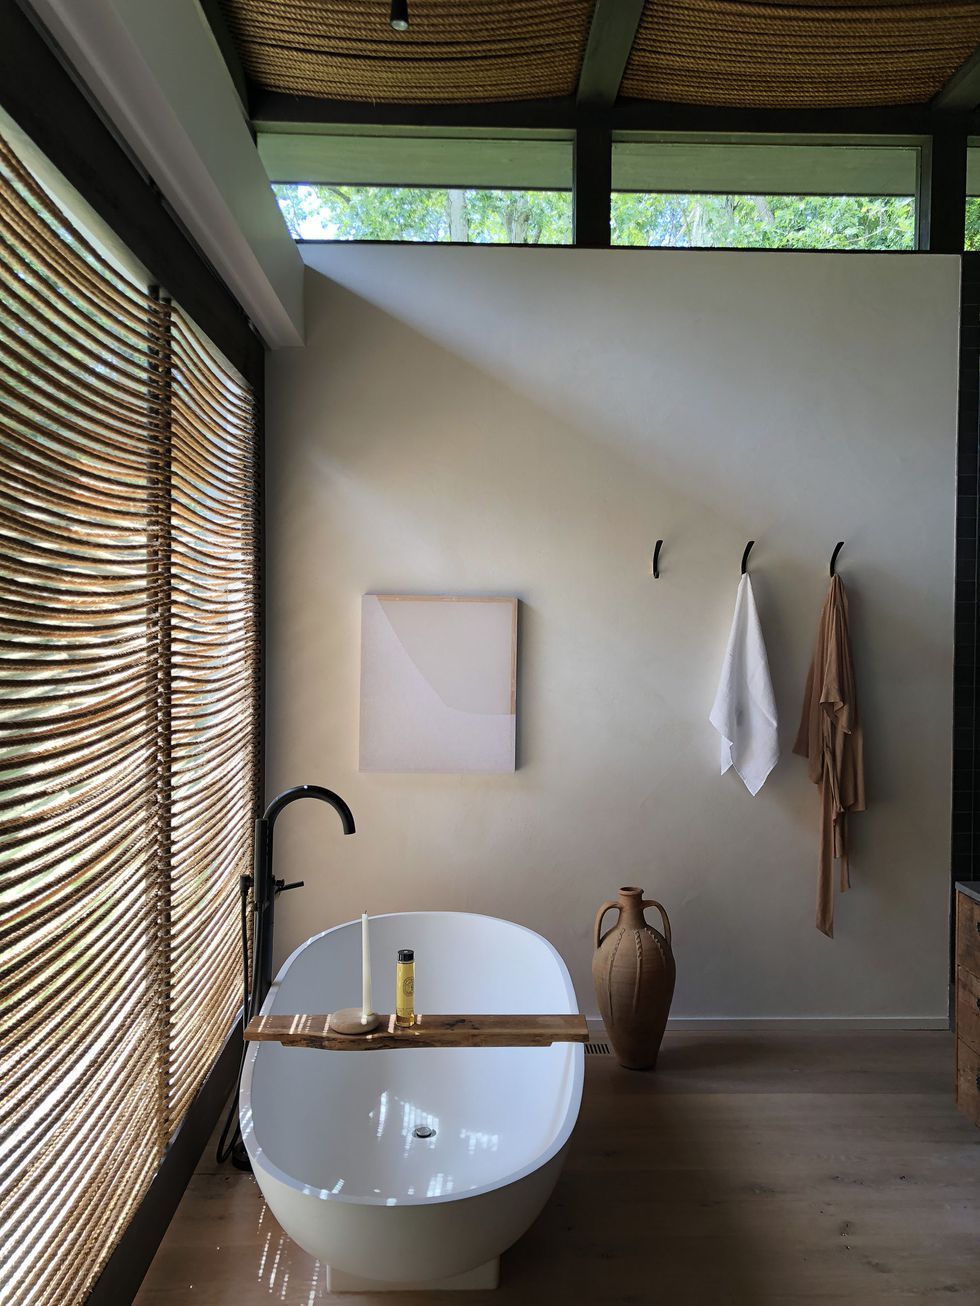 80 Best Bathroom Design Ideas Gallery Of Stylish Small Large